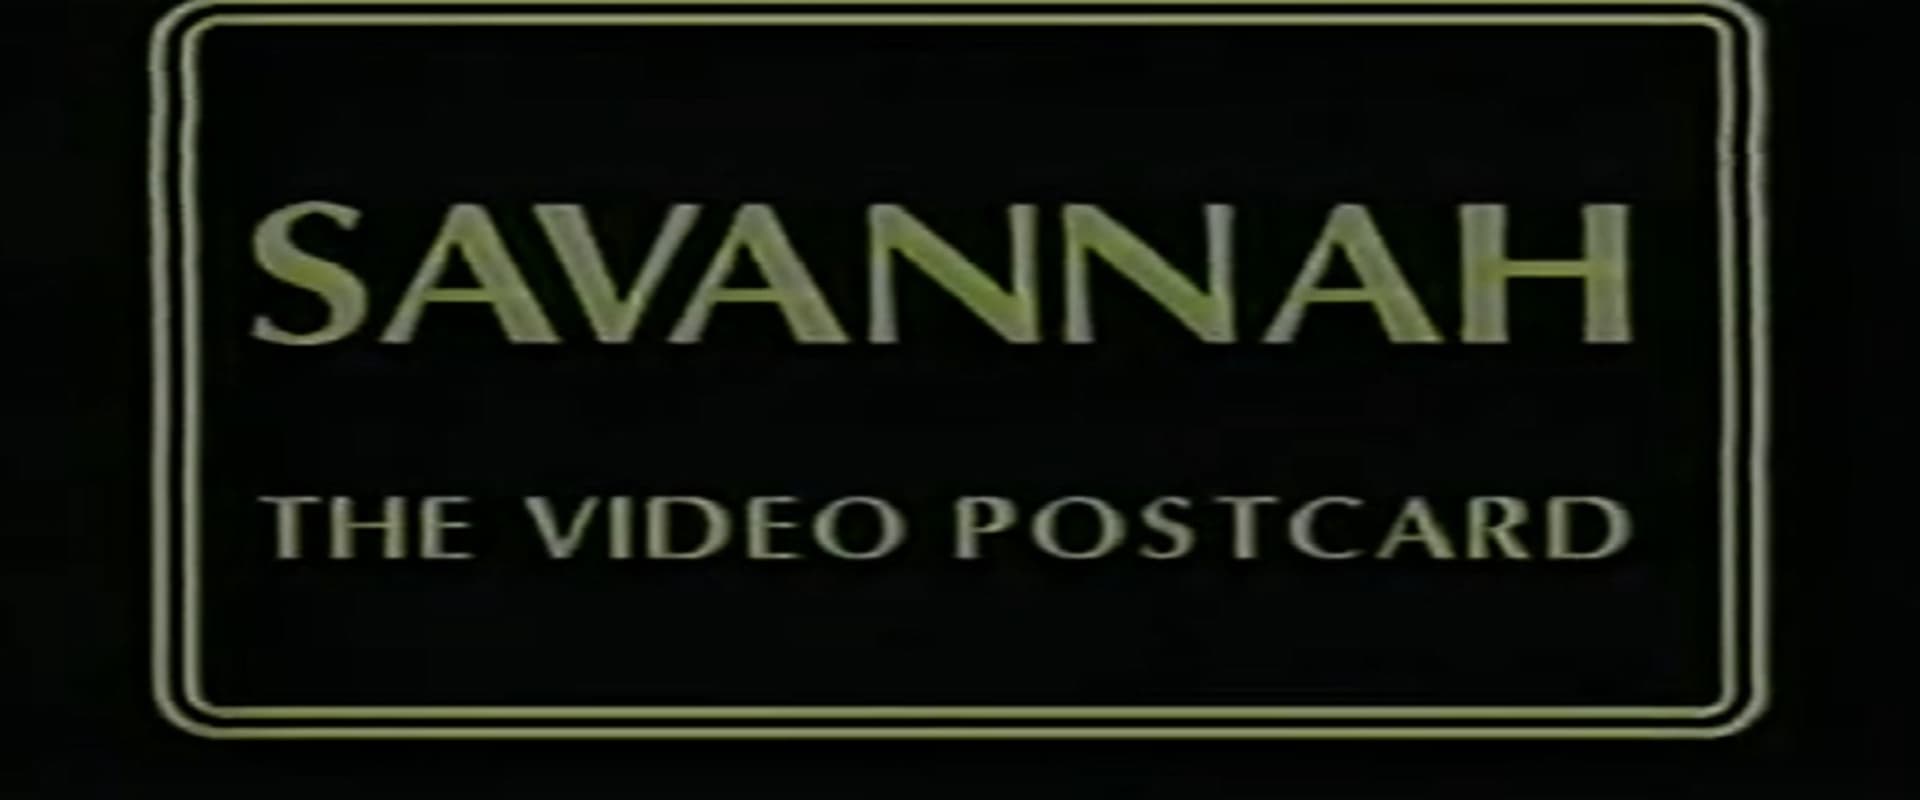 Savannah: The Video Postcard